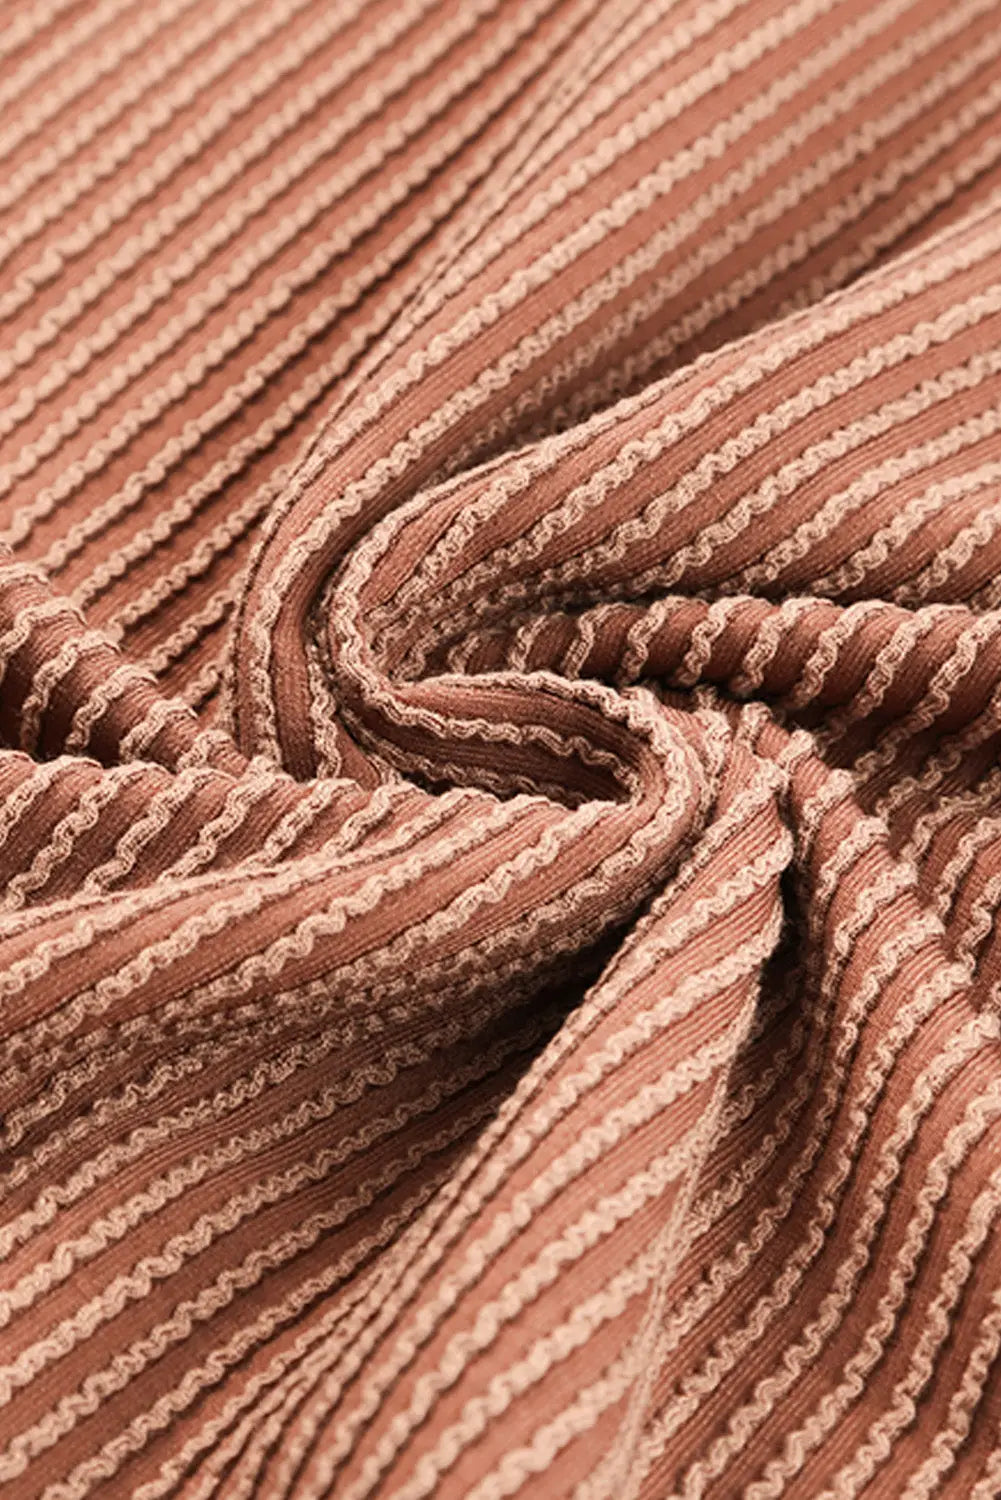 Striped ribbed knit t-shirt shift dress - t-shirt dresses